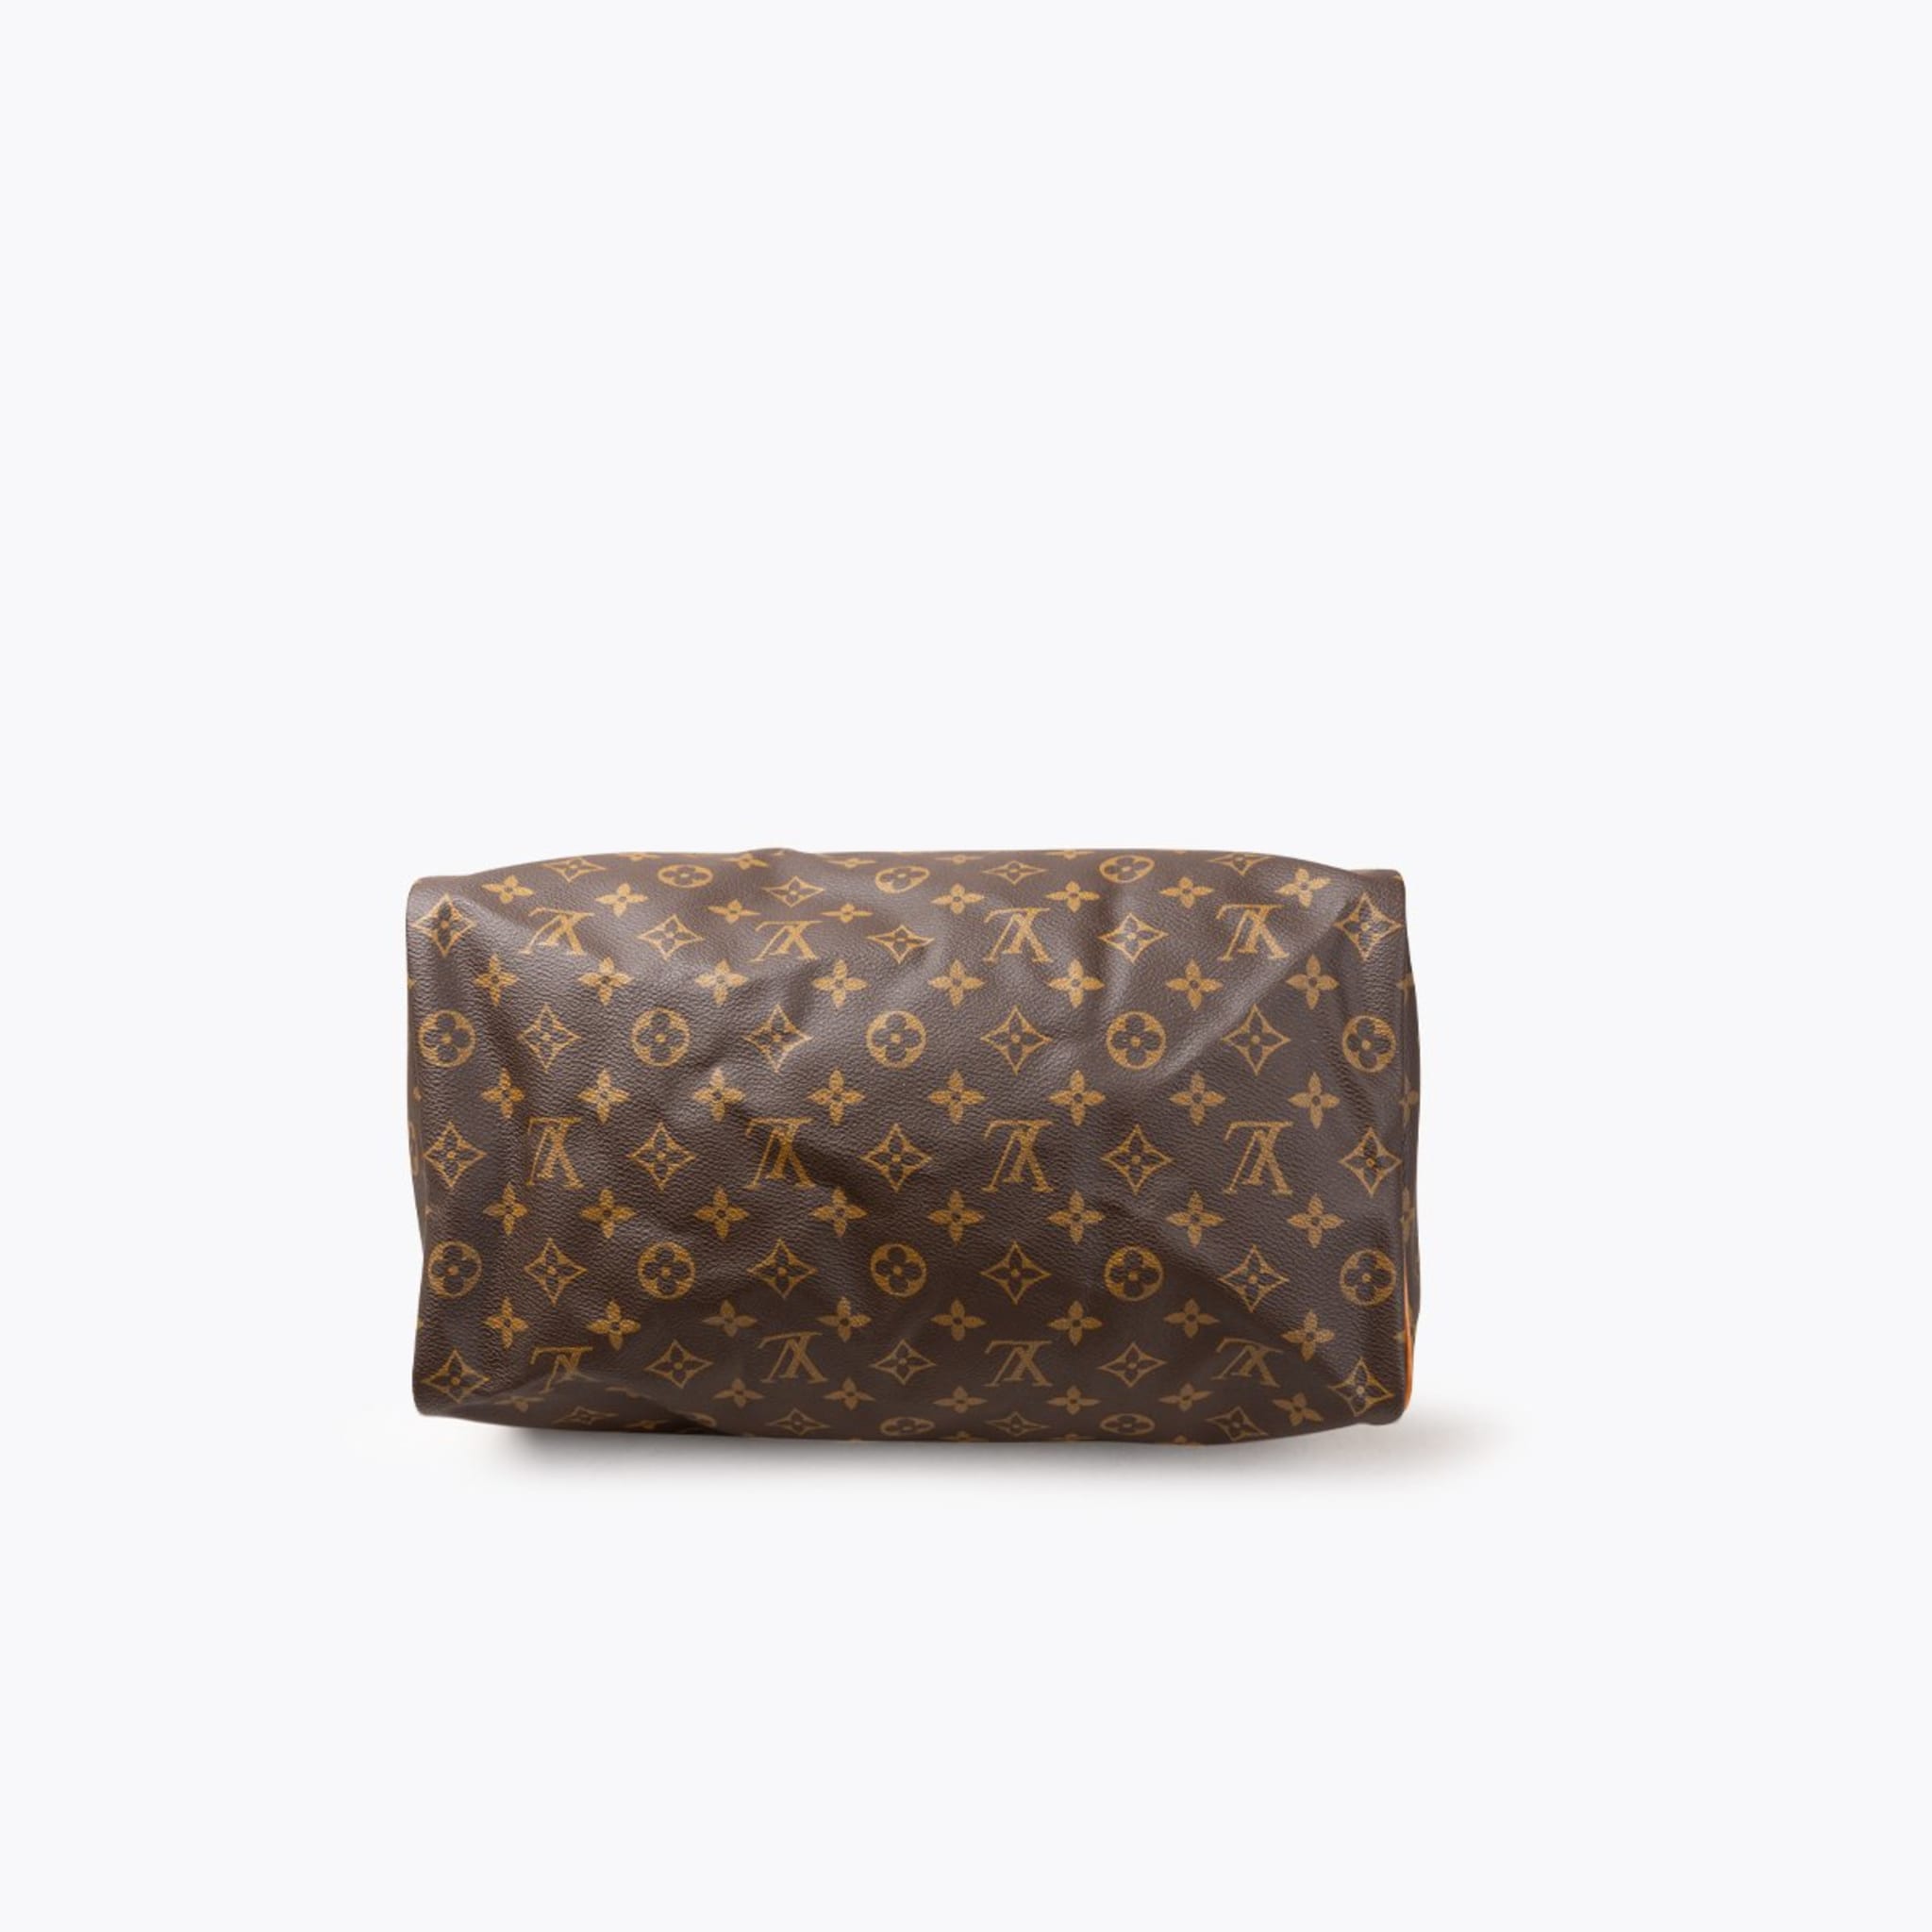 Louis Vuitton Speedy Monogram 35 Bag